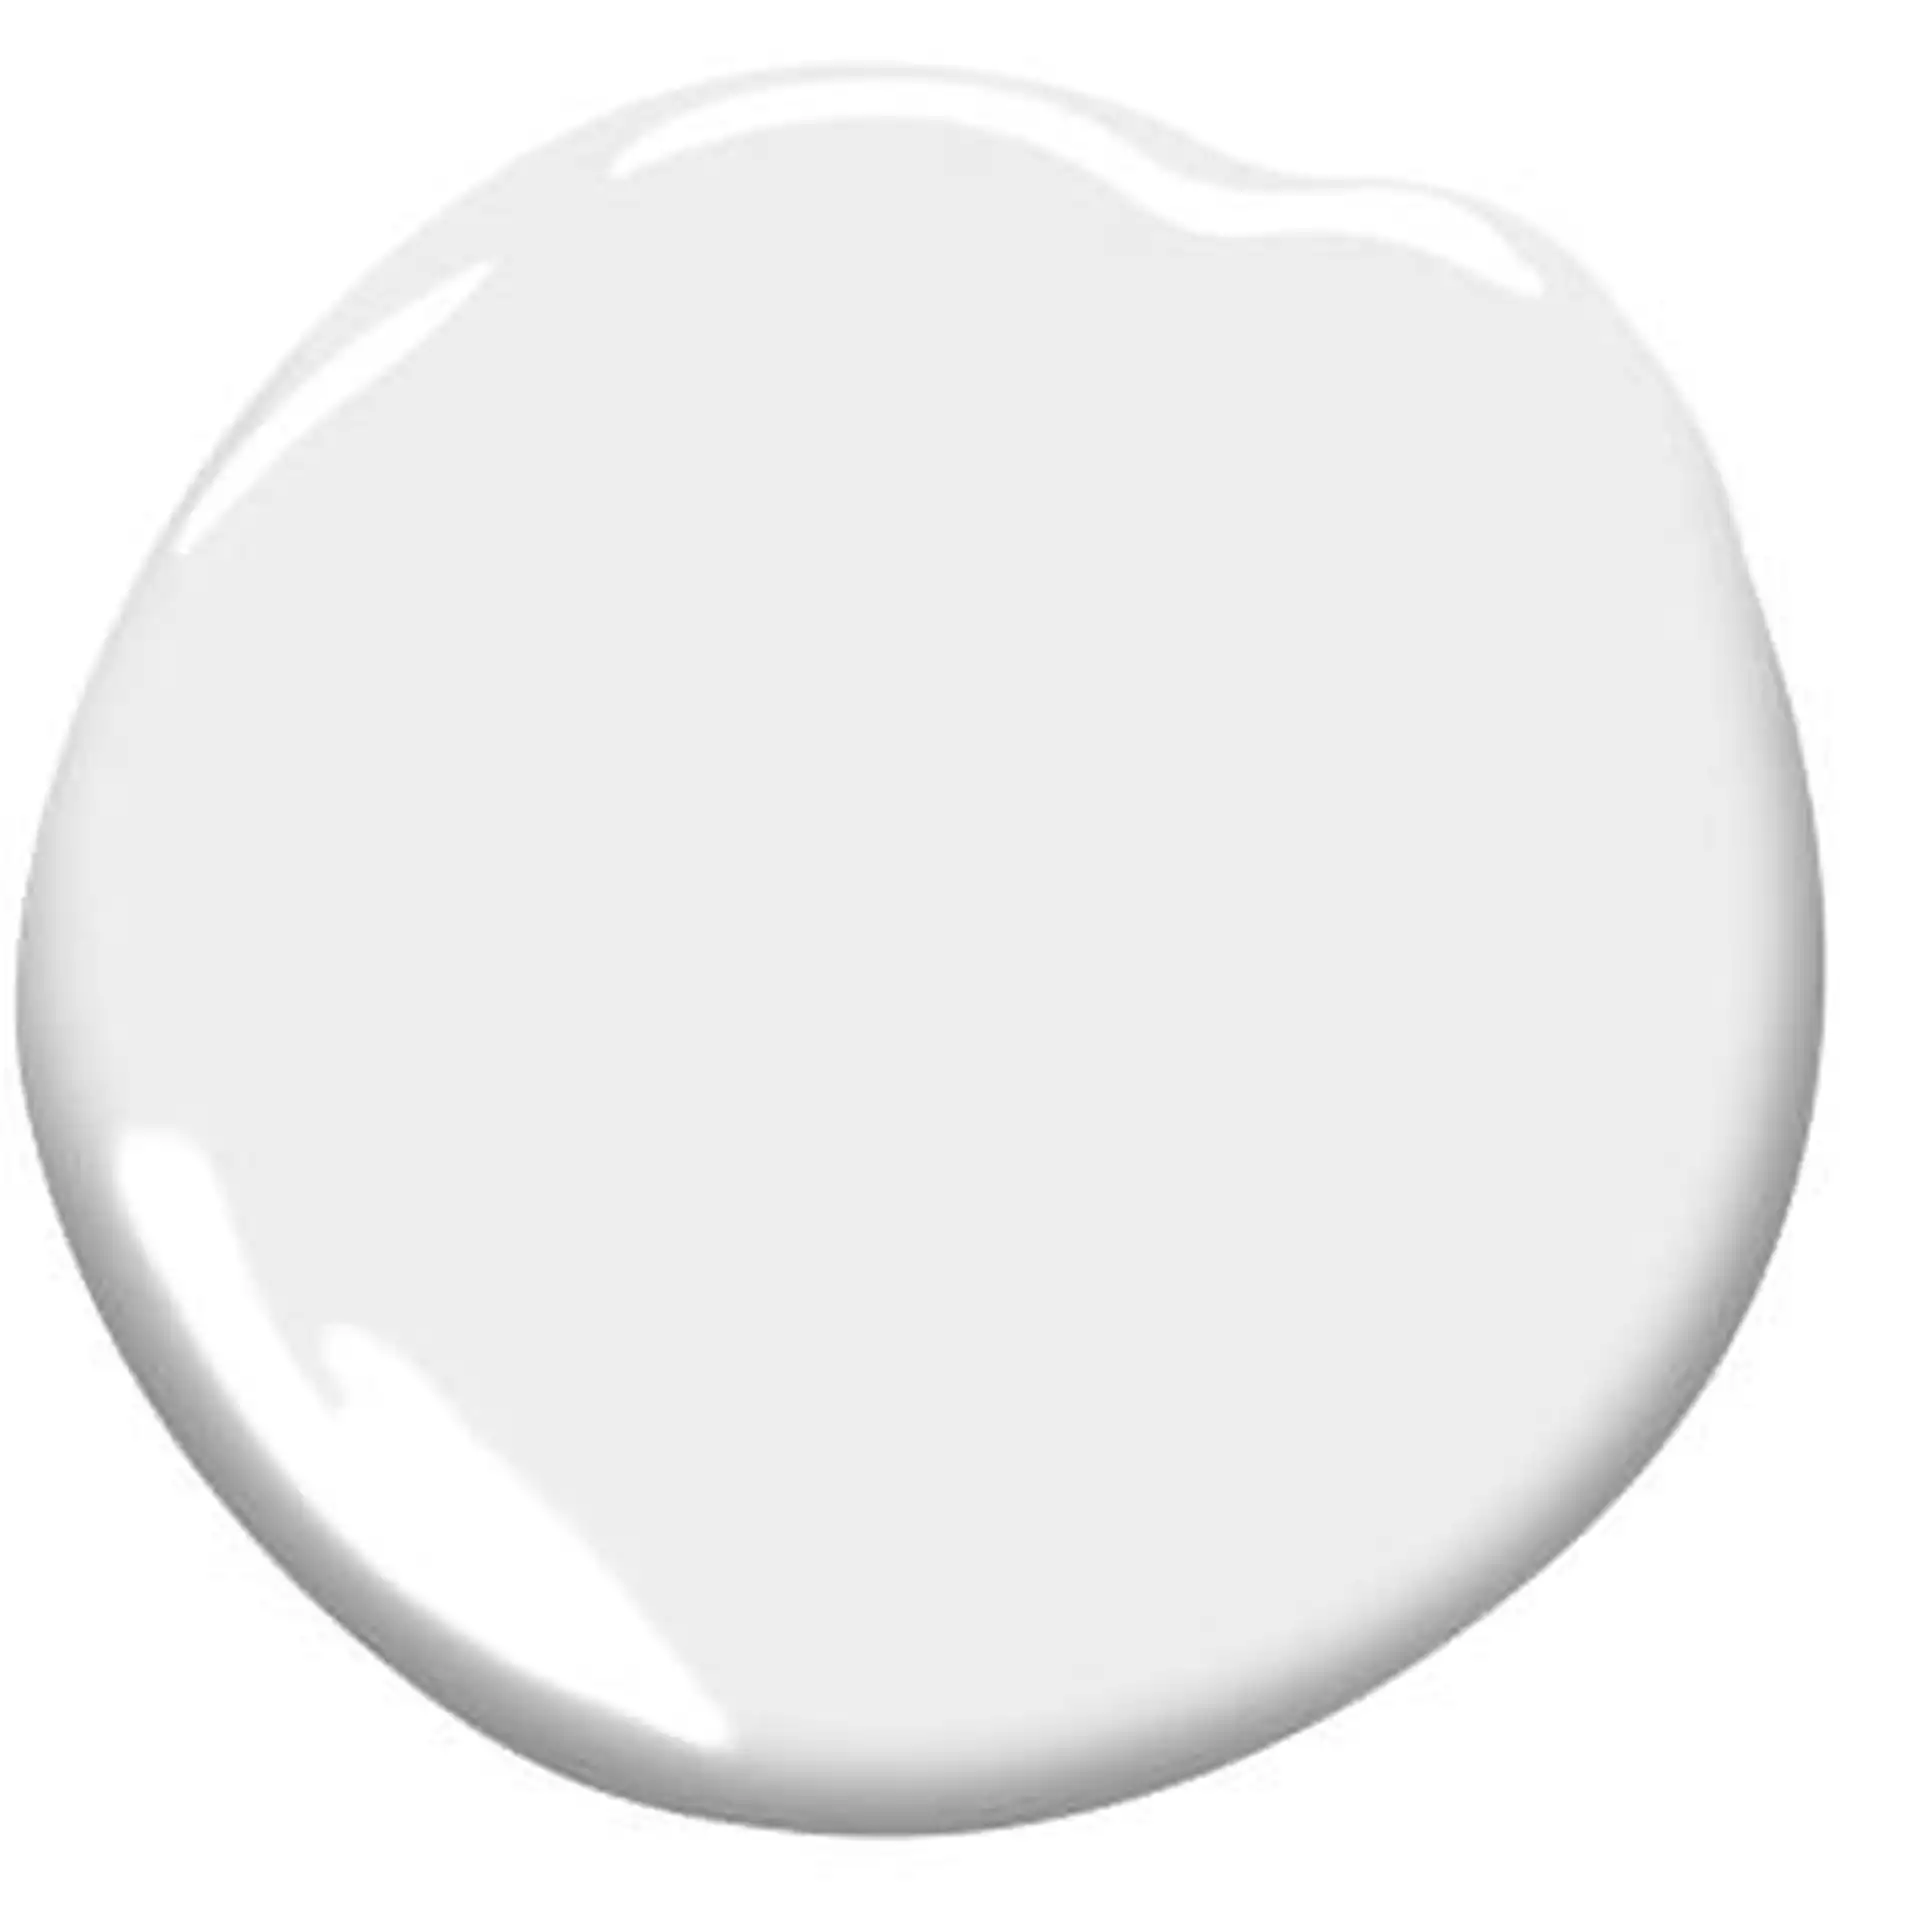 Color Samples, Decorator's White CC-20, Eggshell, Pint